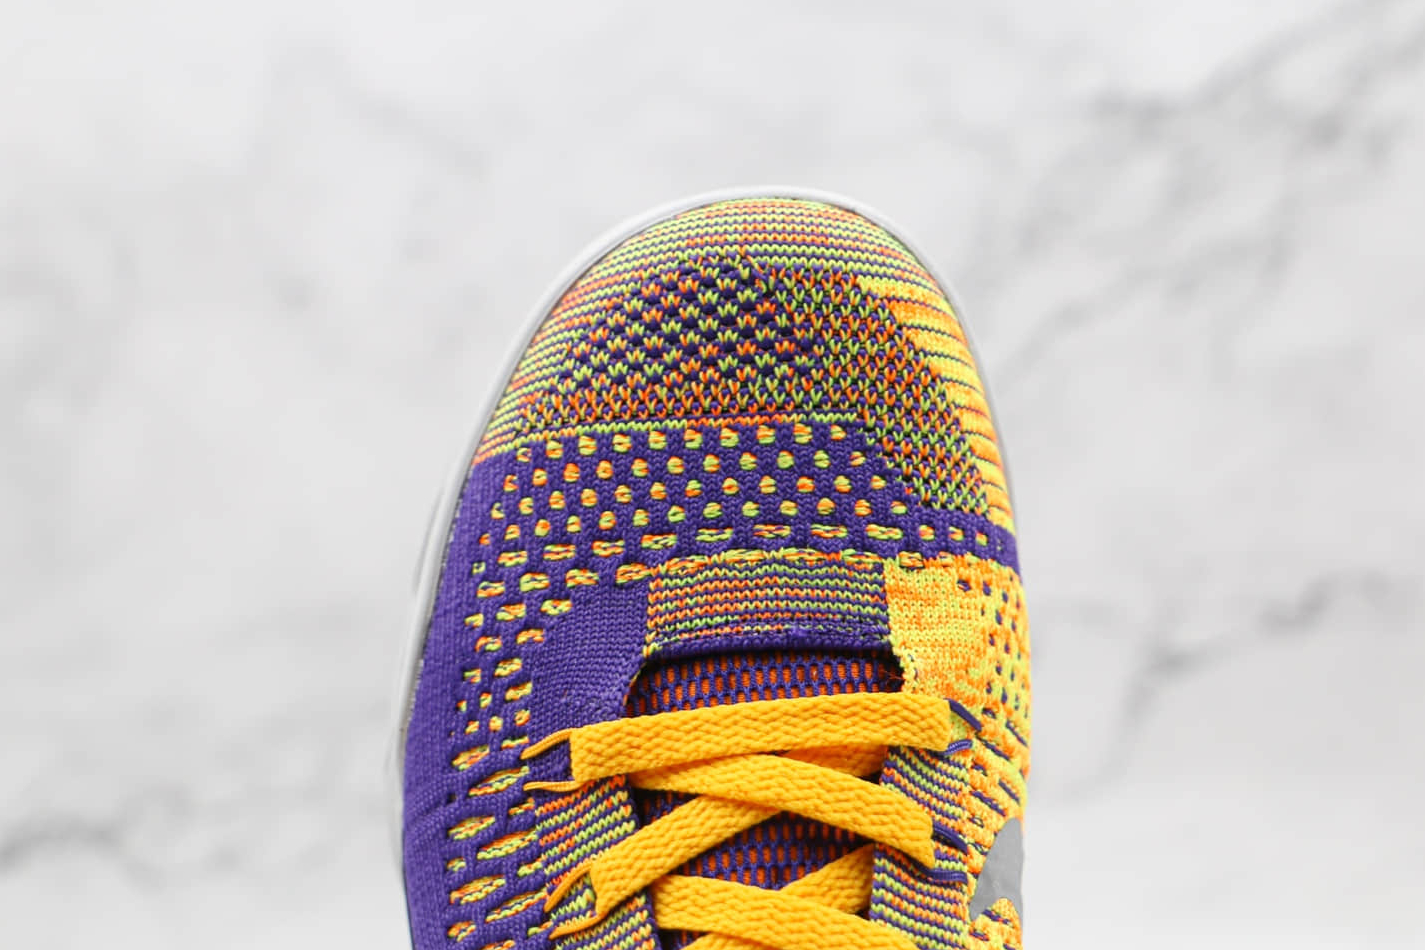 Nike Zoom Kobe 9 IX Purple Yellow Black 630487-500 - Stylish and Dynamic Performance Basketball Shoes